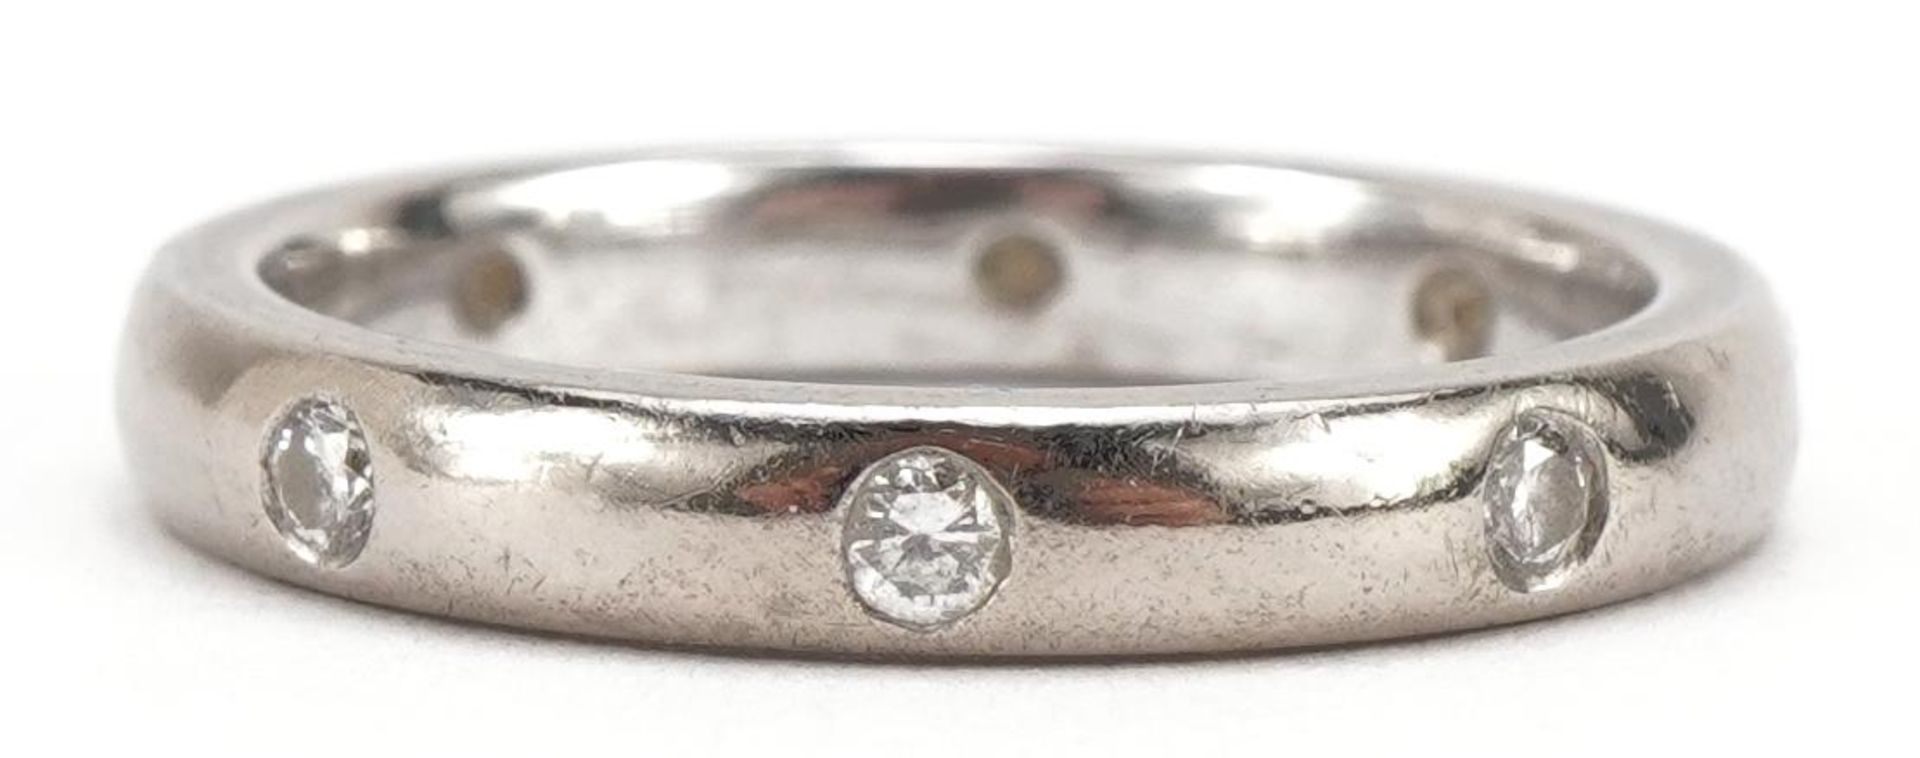 Platinum or 18ct white gold ring set with diamonds, indistinct hallmarks, size M/N, 4.9g